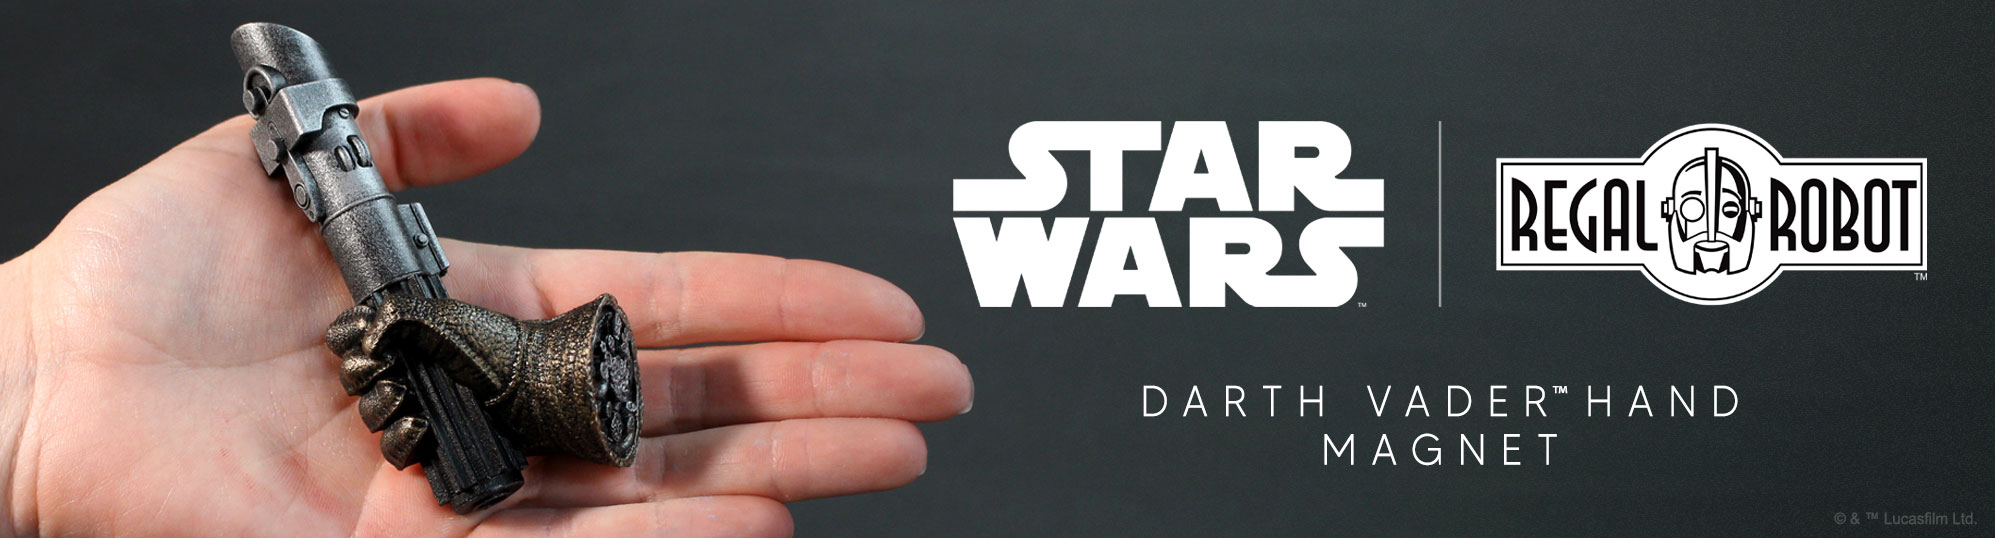 Darth Vader hand cut off Return of the Jedi